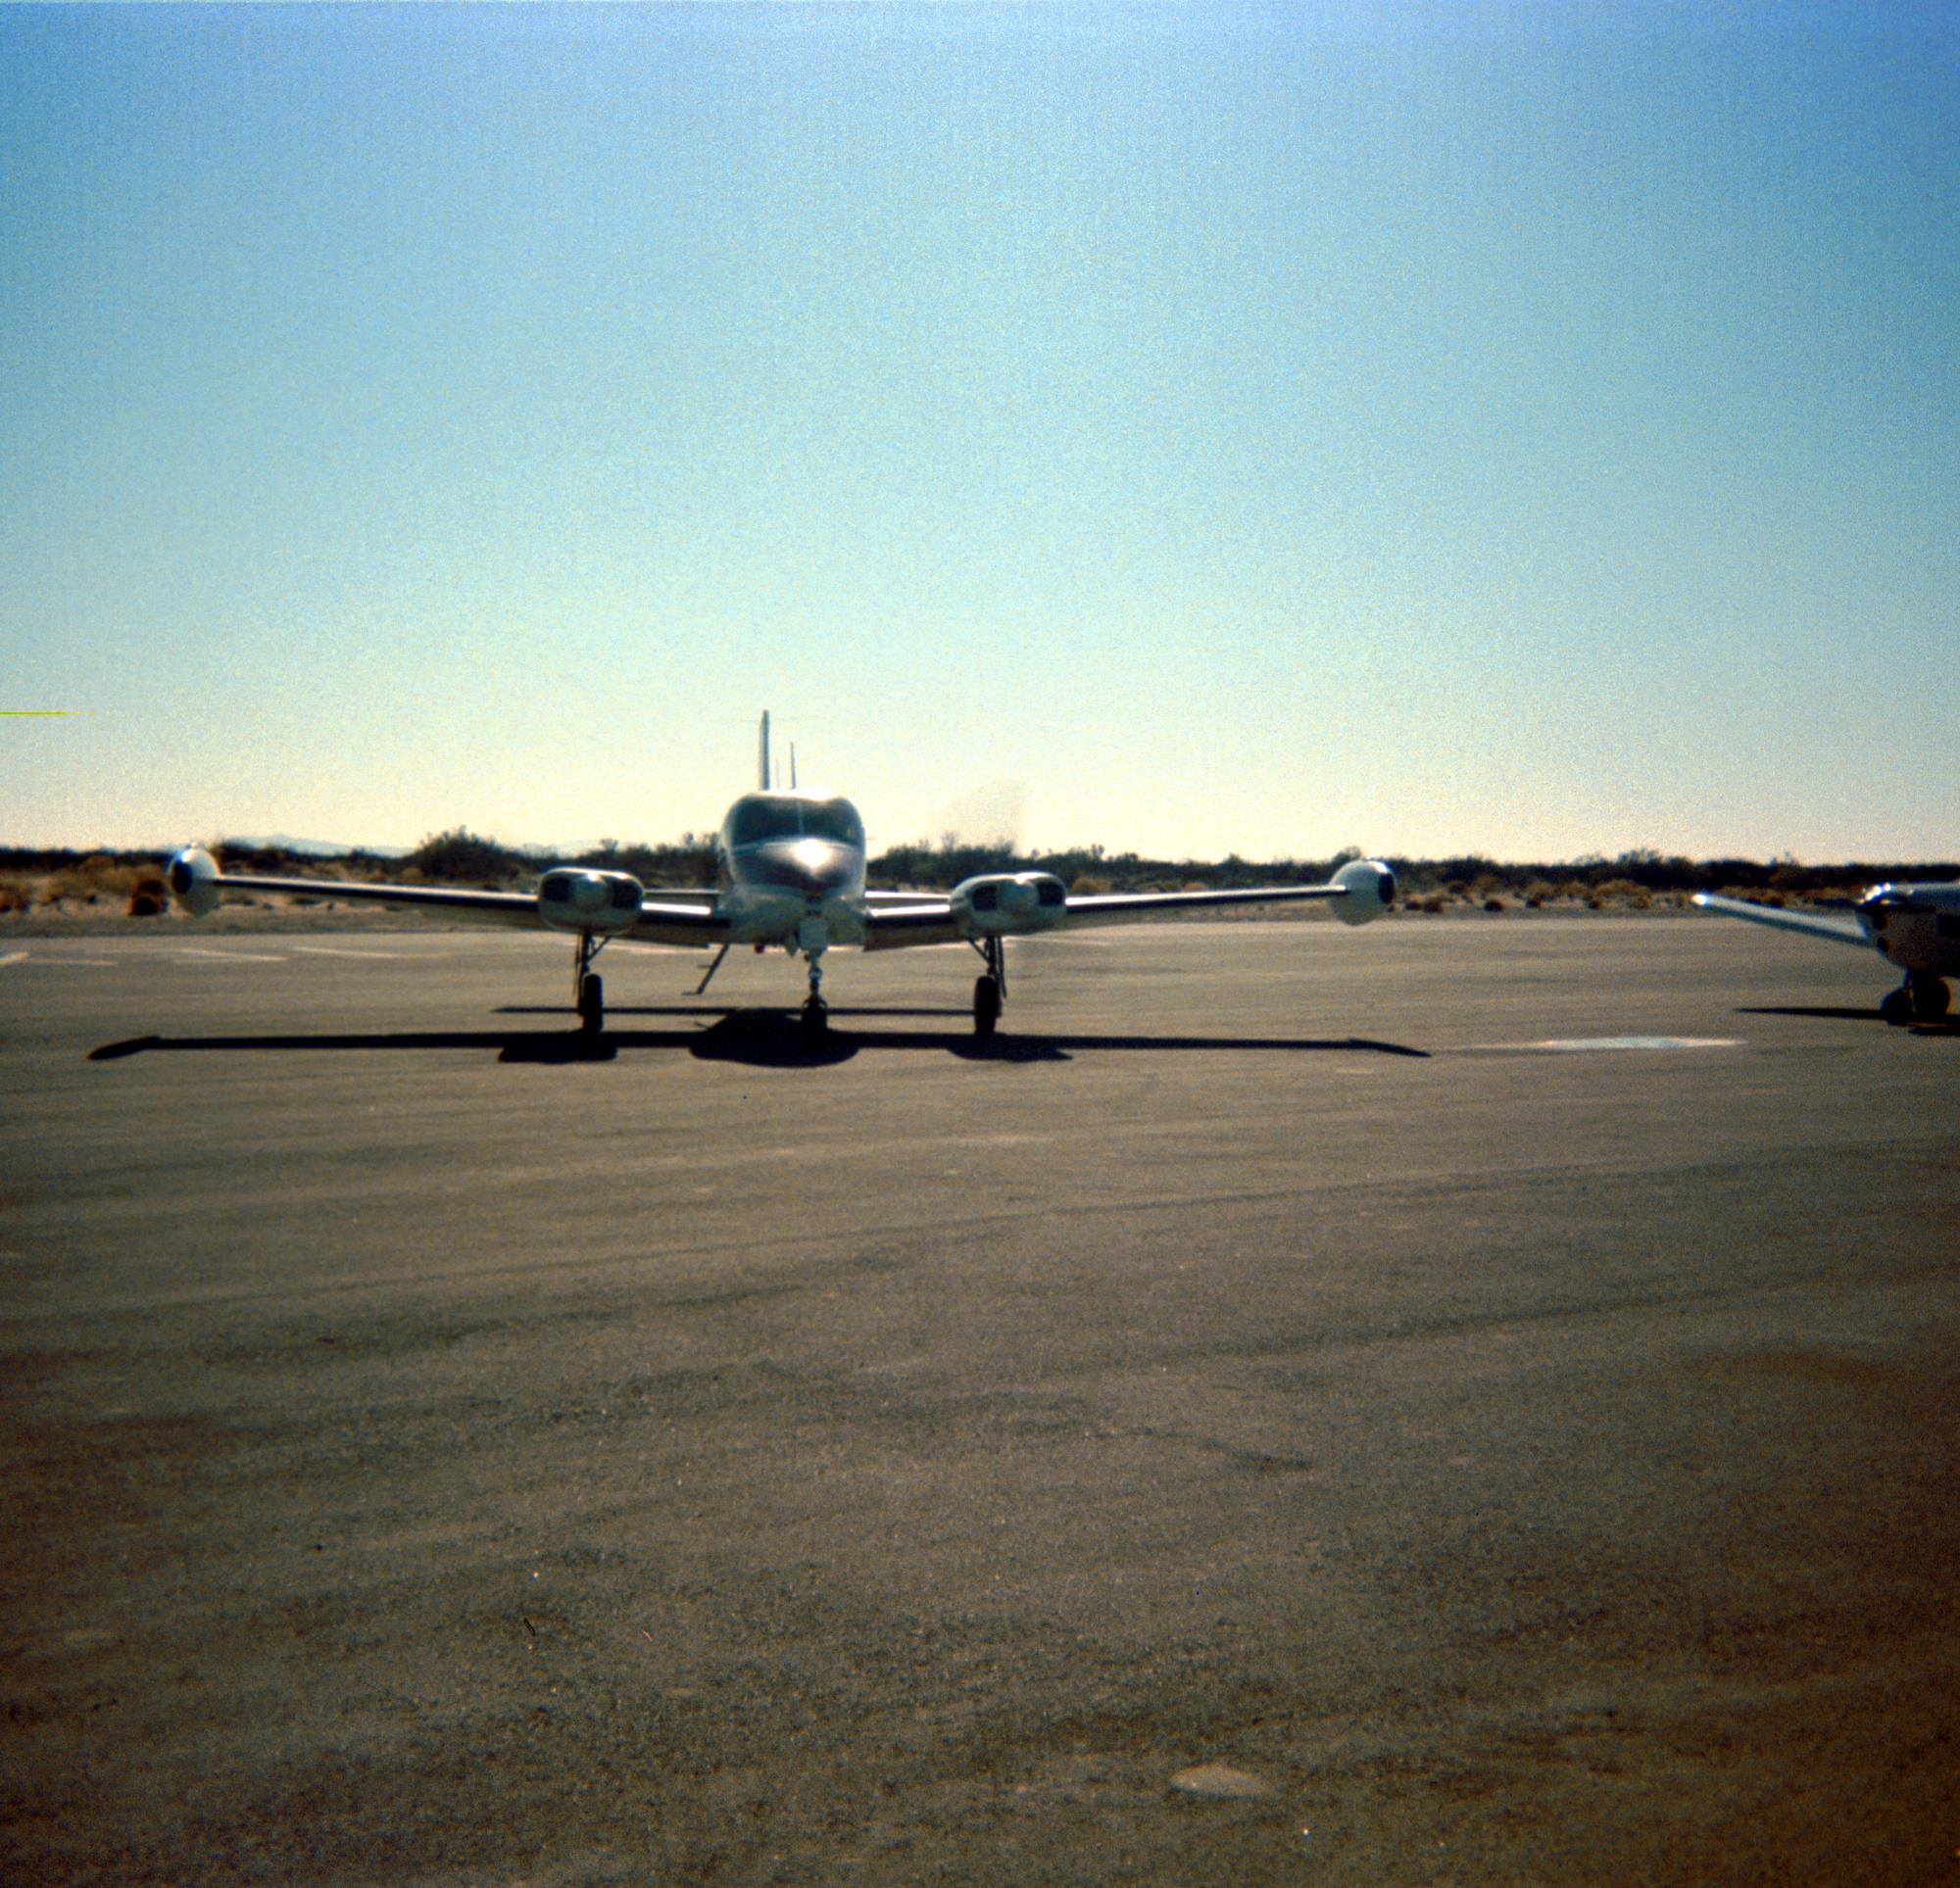 Horizon City - West Texas Airfield #2